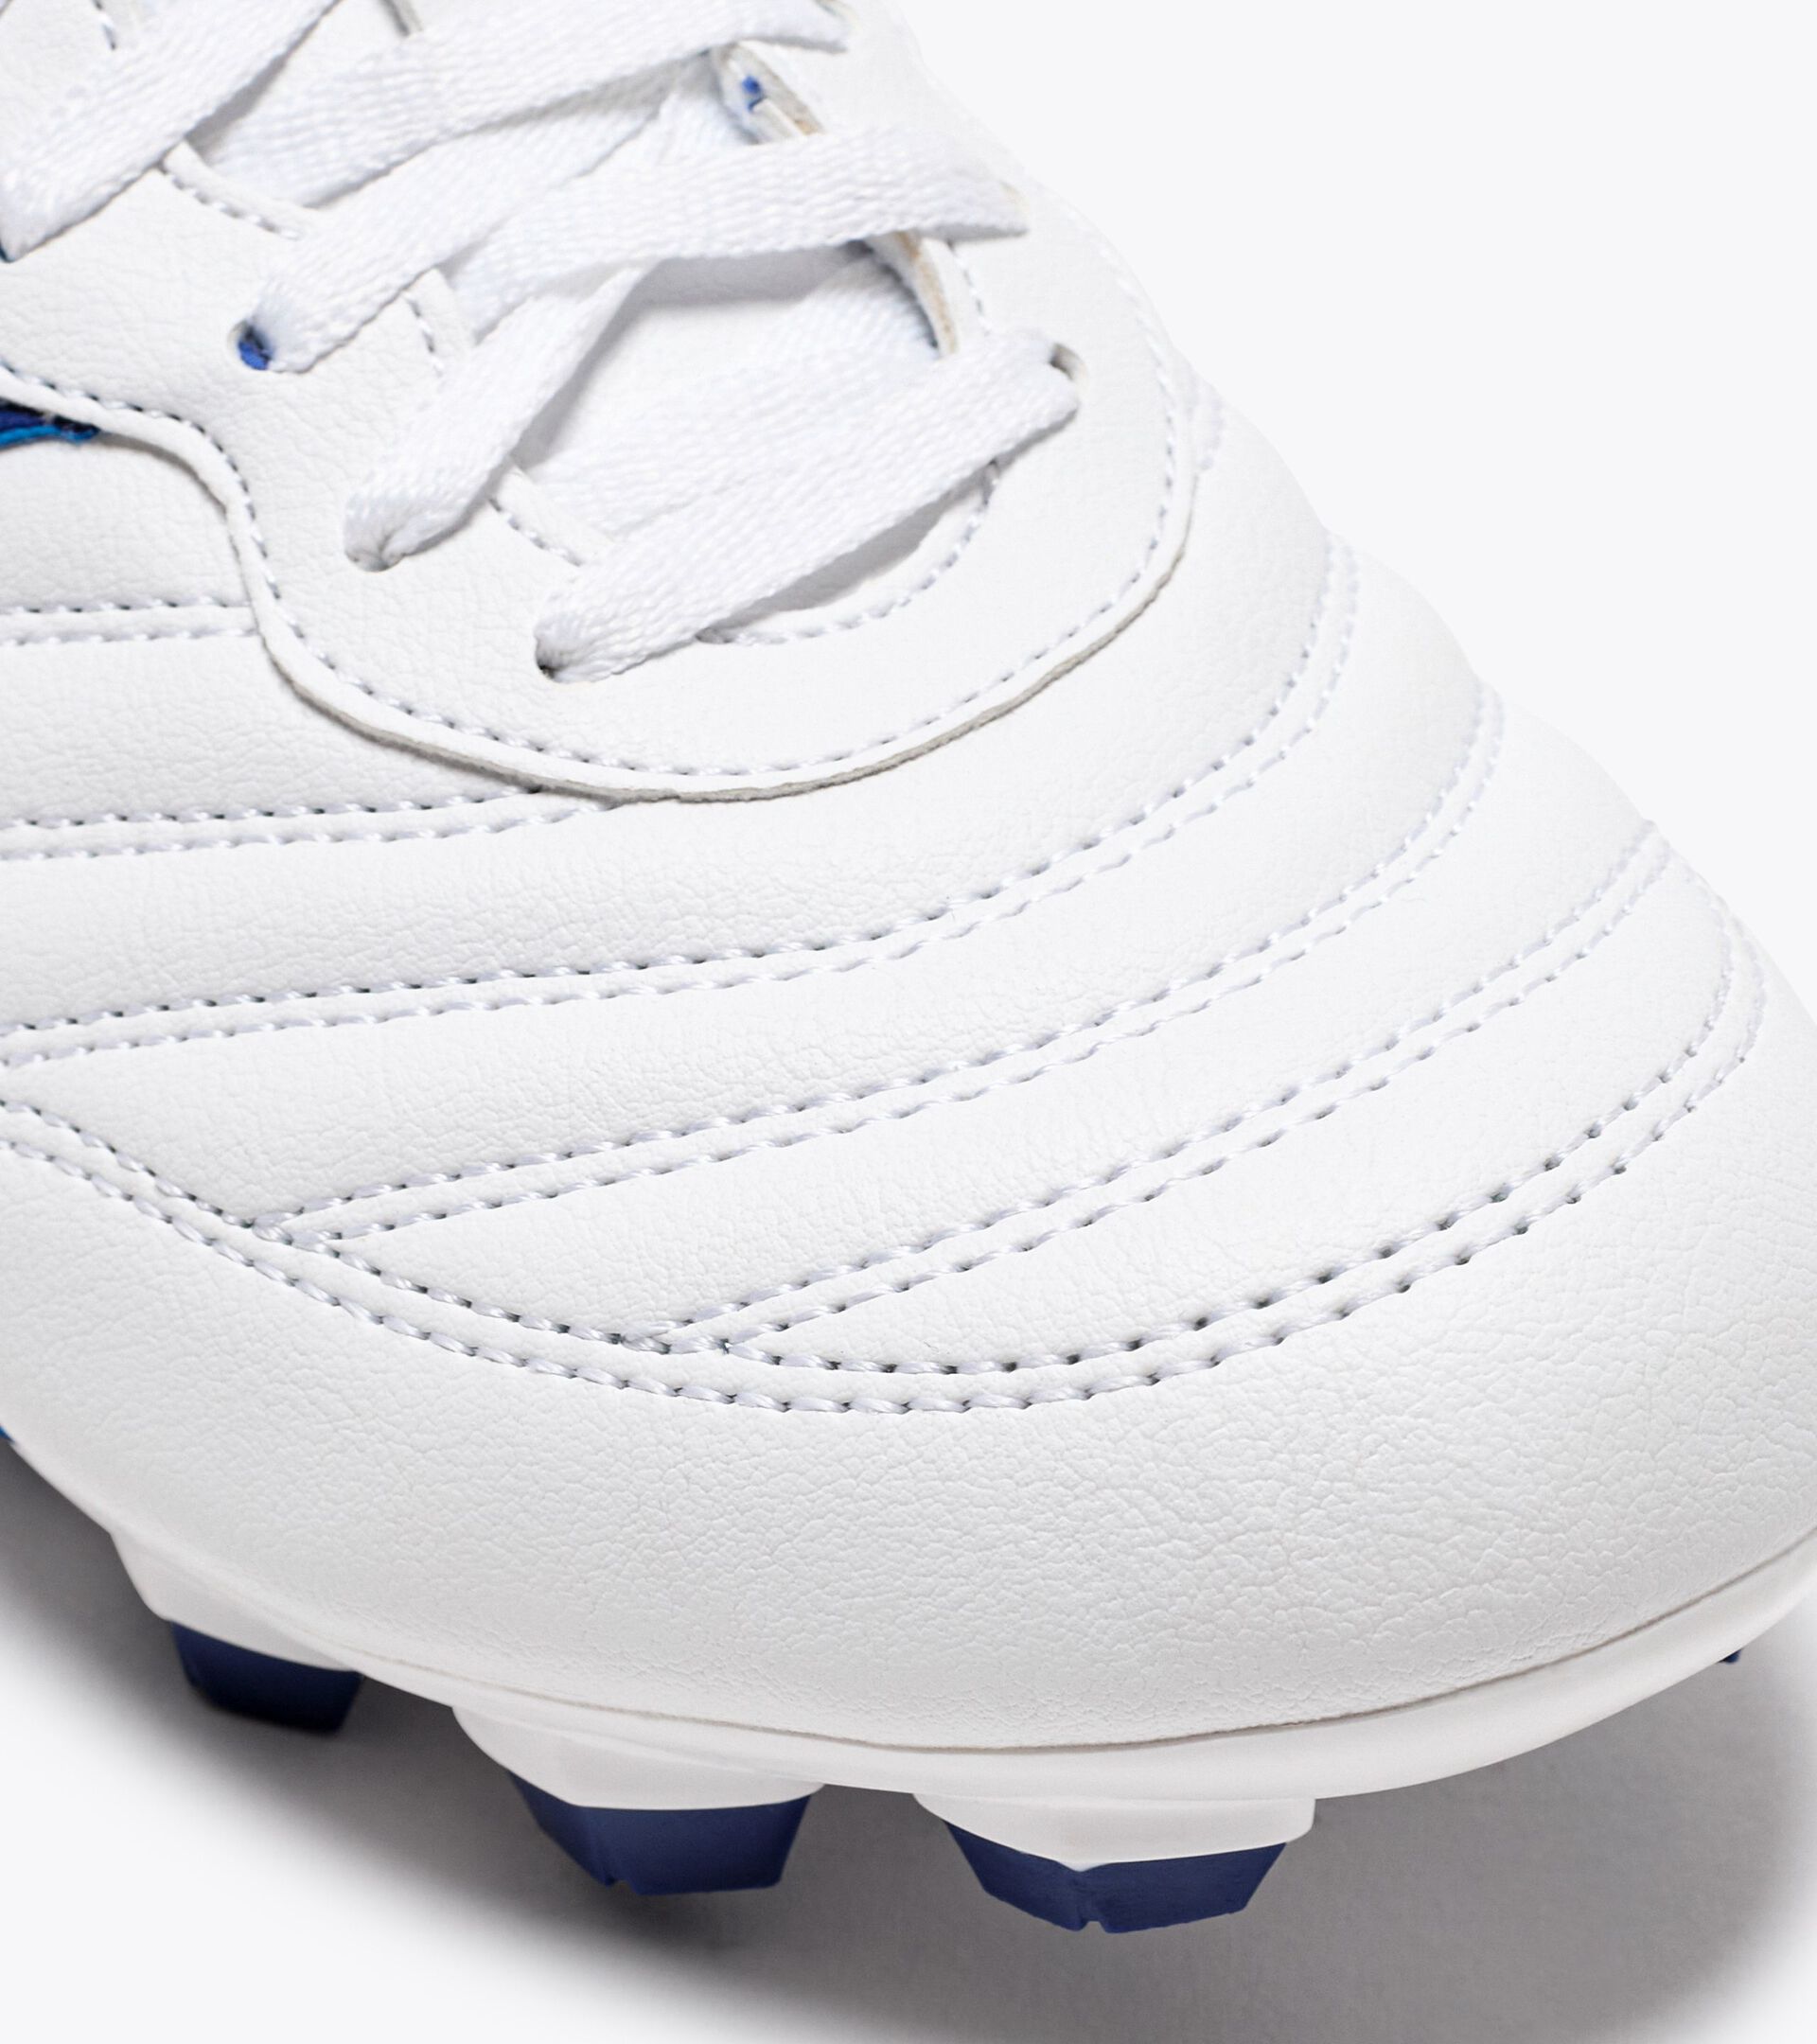 Football boots for synthetic grounds - Junior BRASIL 2 R LPU JR WHITE/NAVY - Diadora